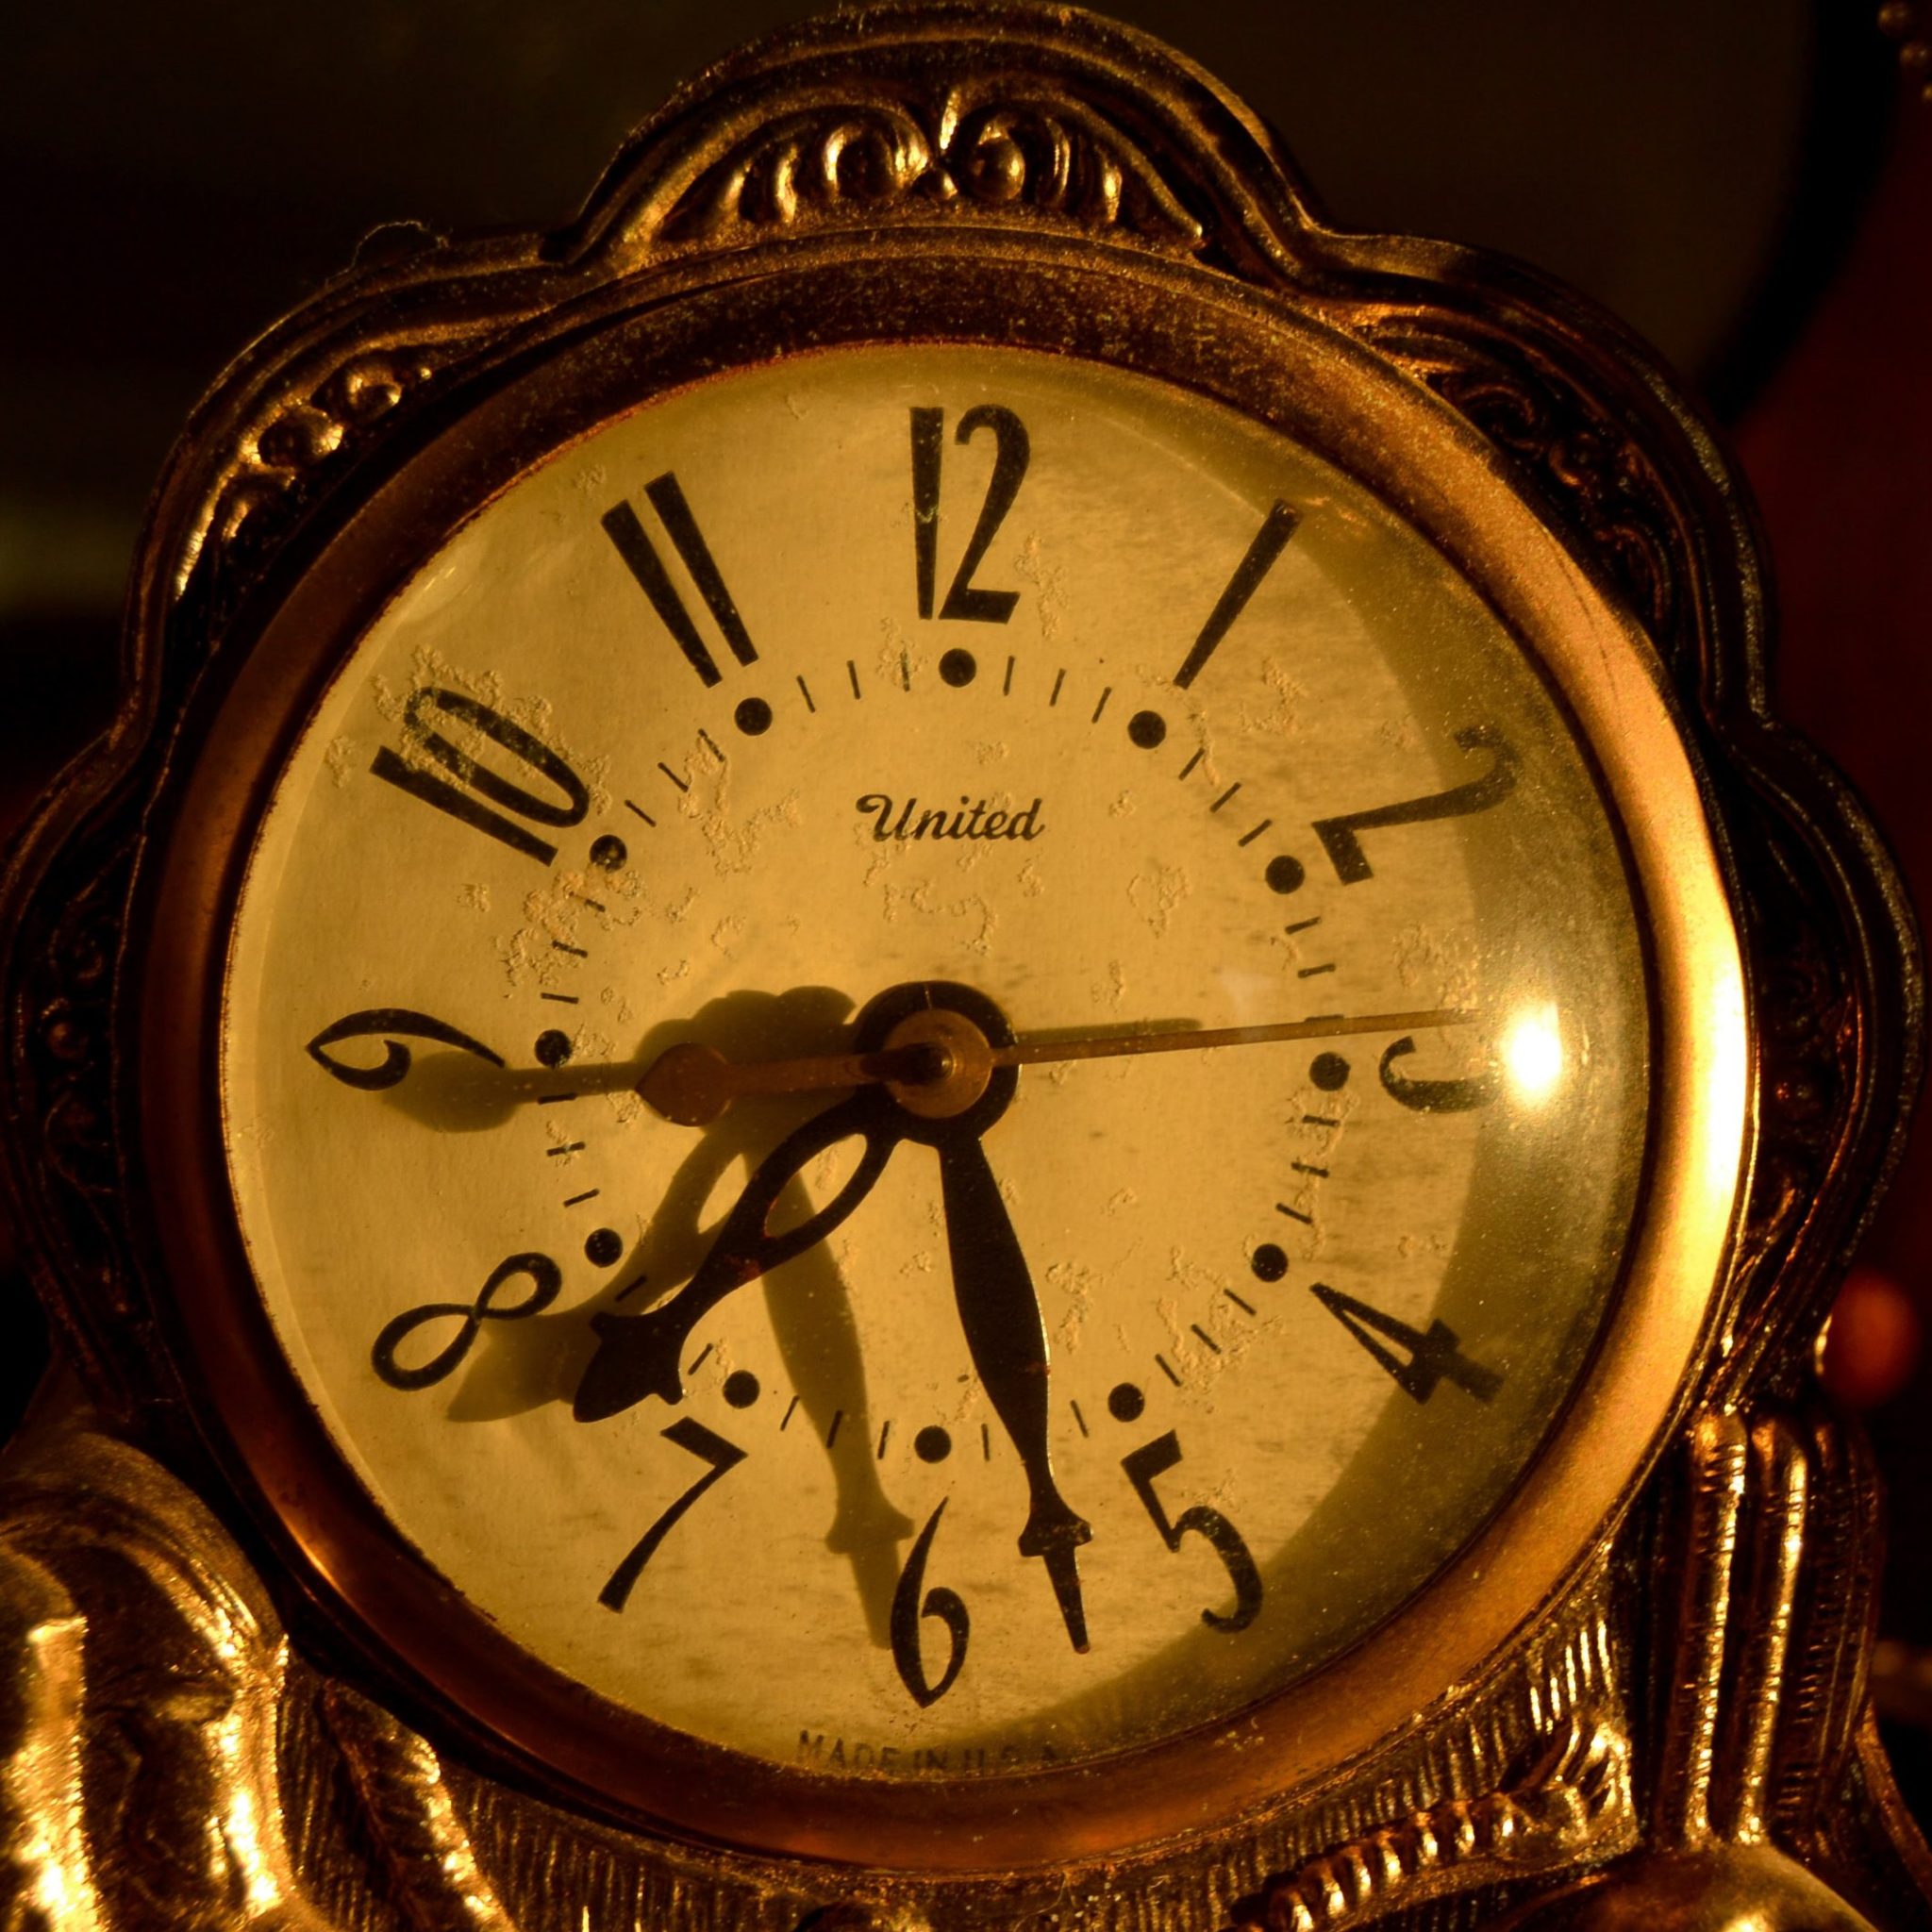 Types of Antique Clocks: How to Use Them in Interior Design